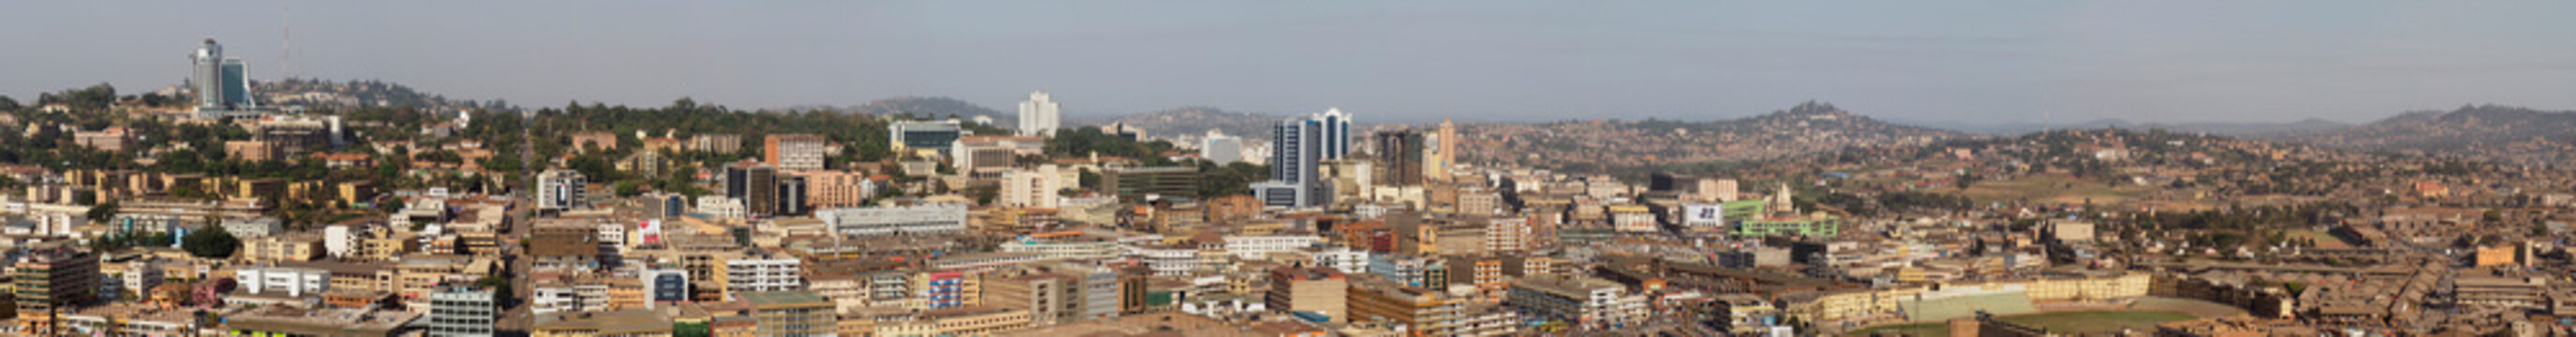 Uganda, Kampala panorama